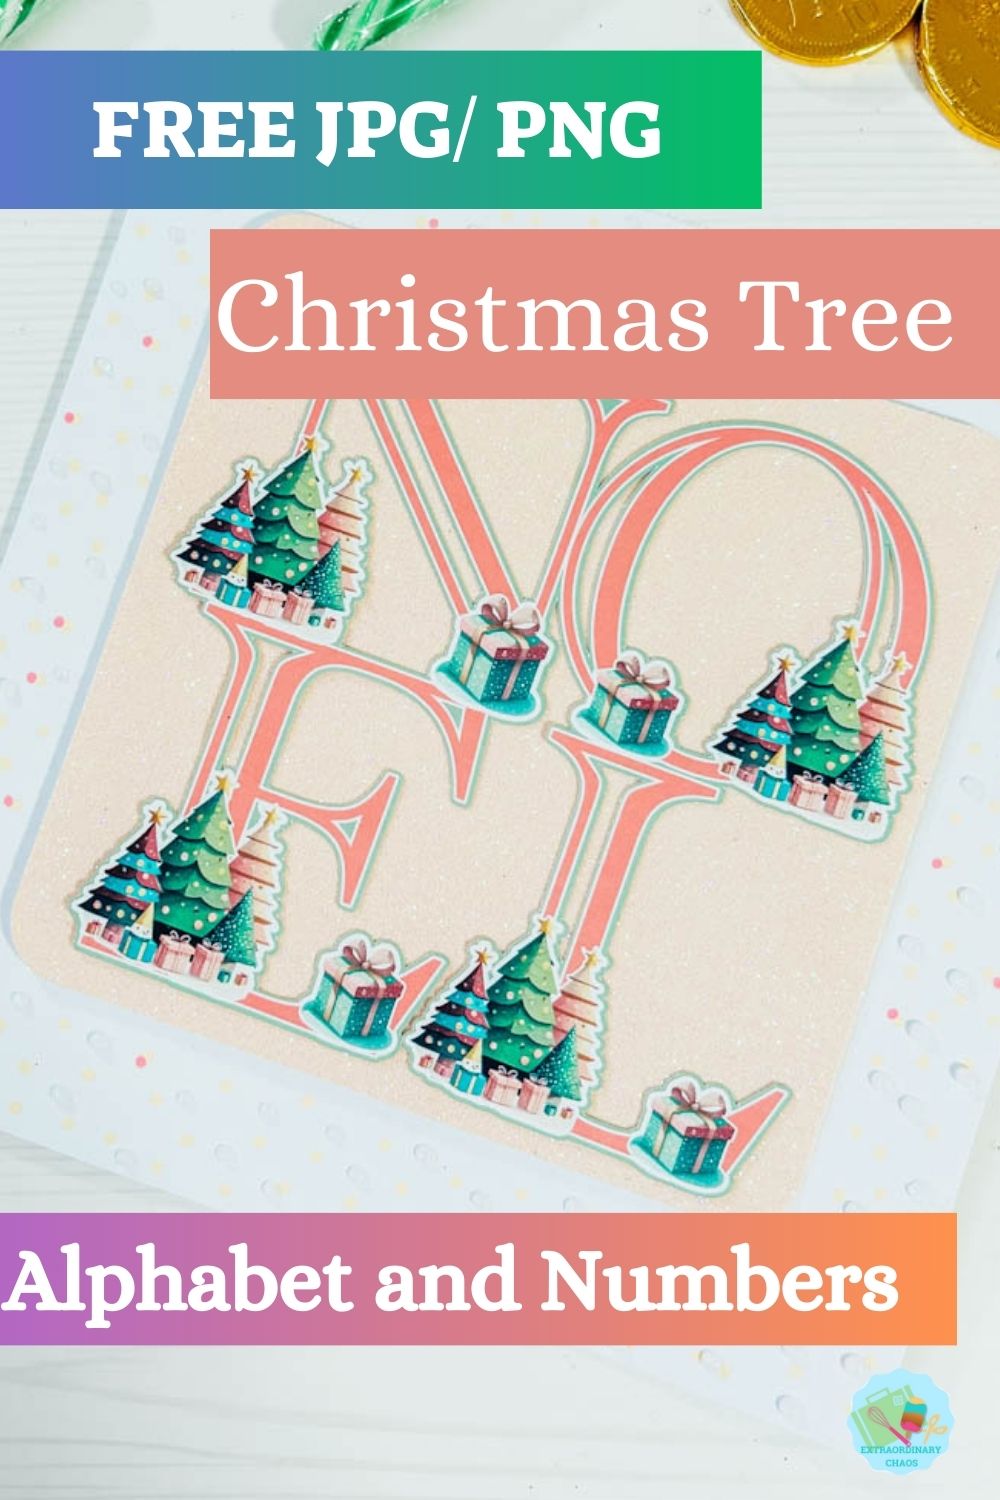 Free JPG PNG Christmas Tree Printable Alphabet and Numbers